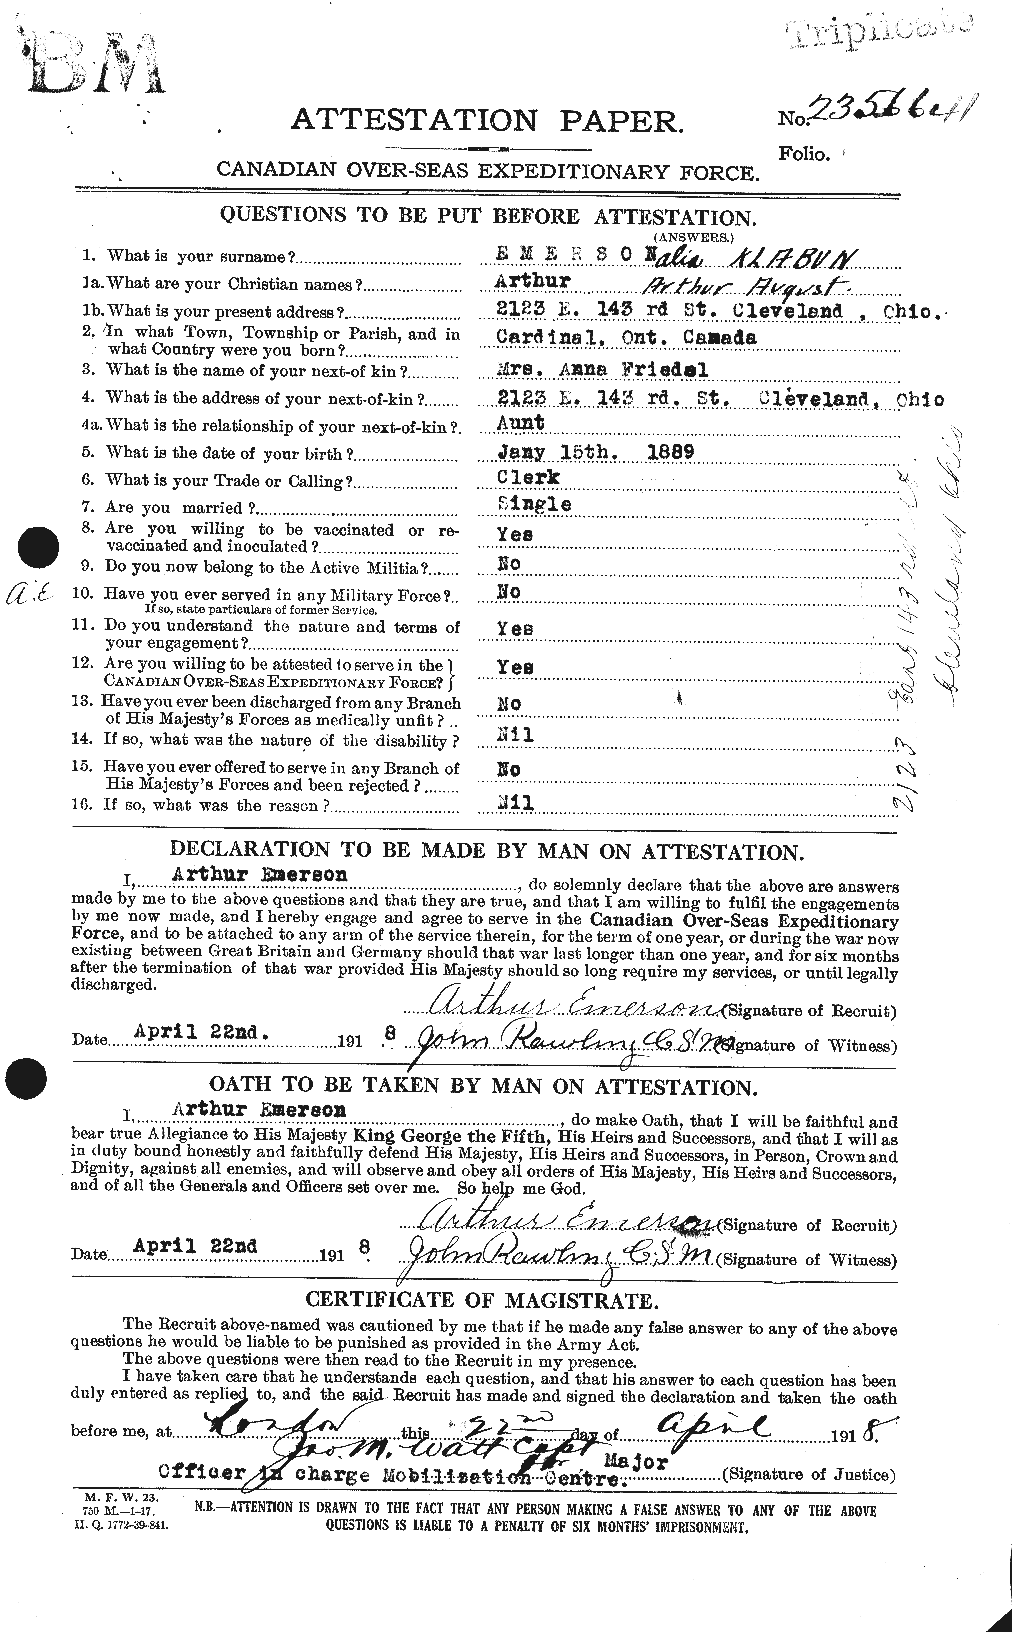 EMERSON, ARTHUR, KLABUN, ARTHUR AUGUST (AKA) 1889-01-15